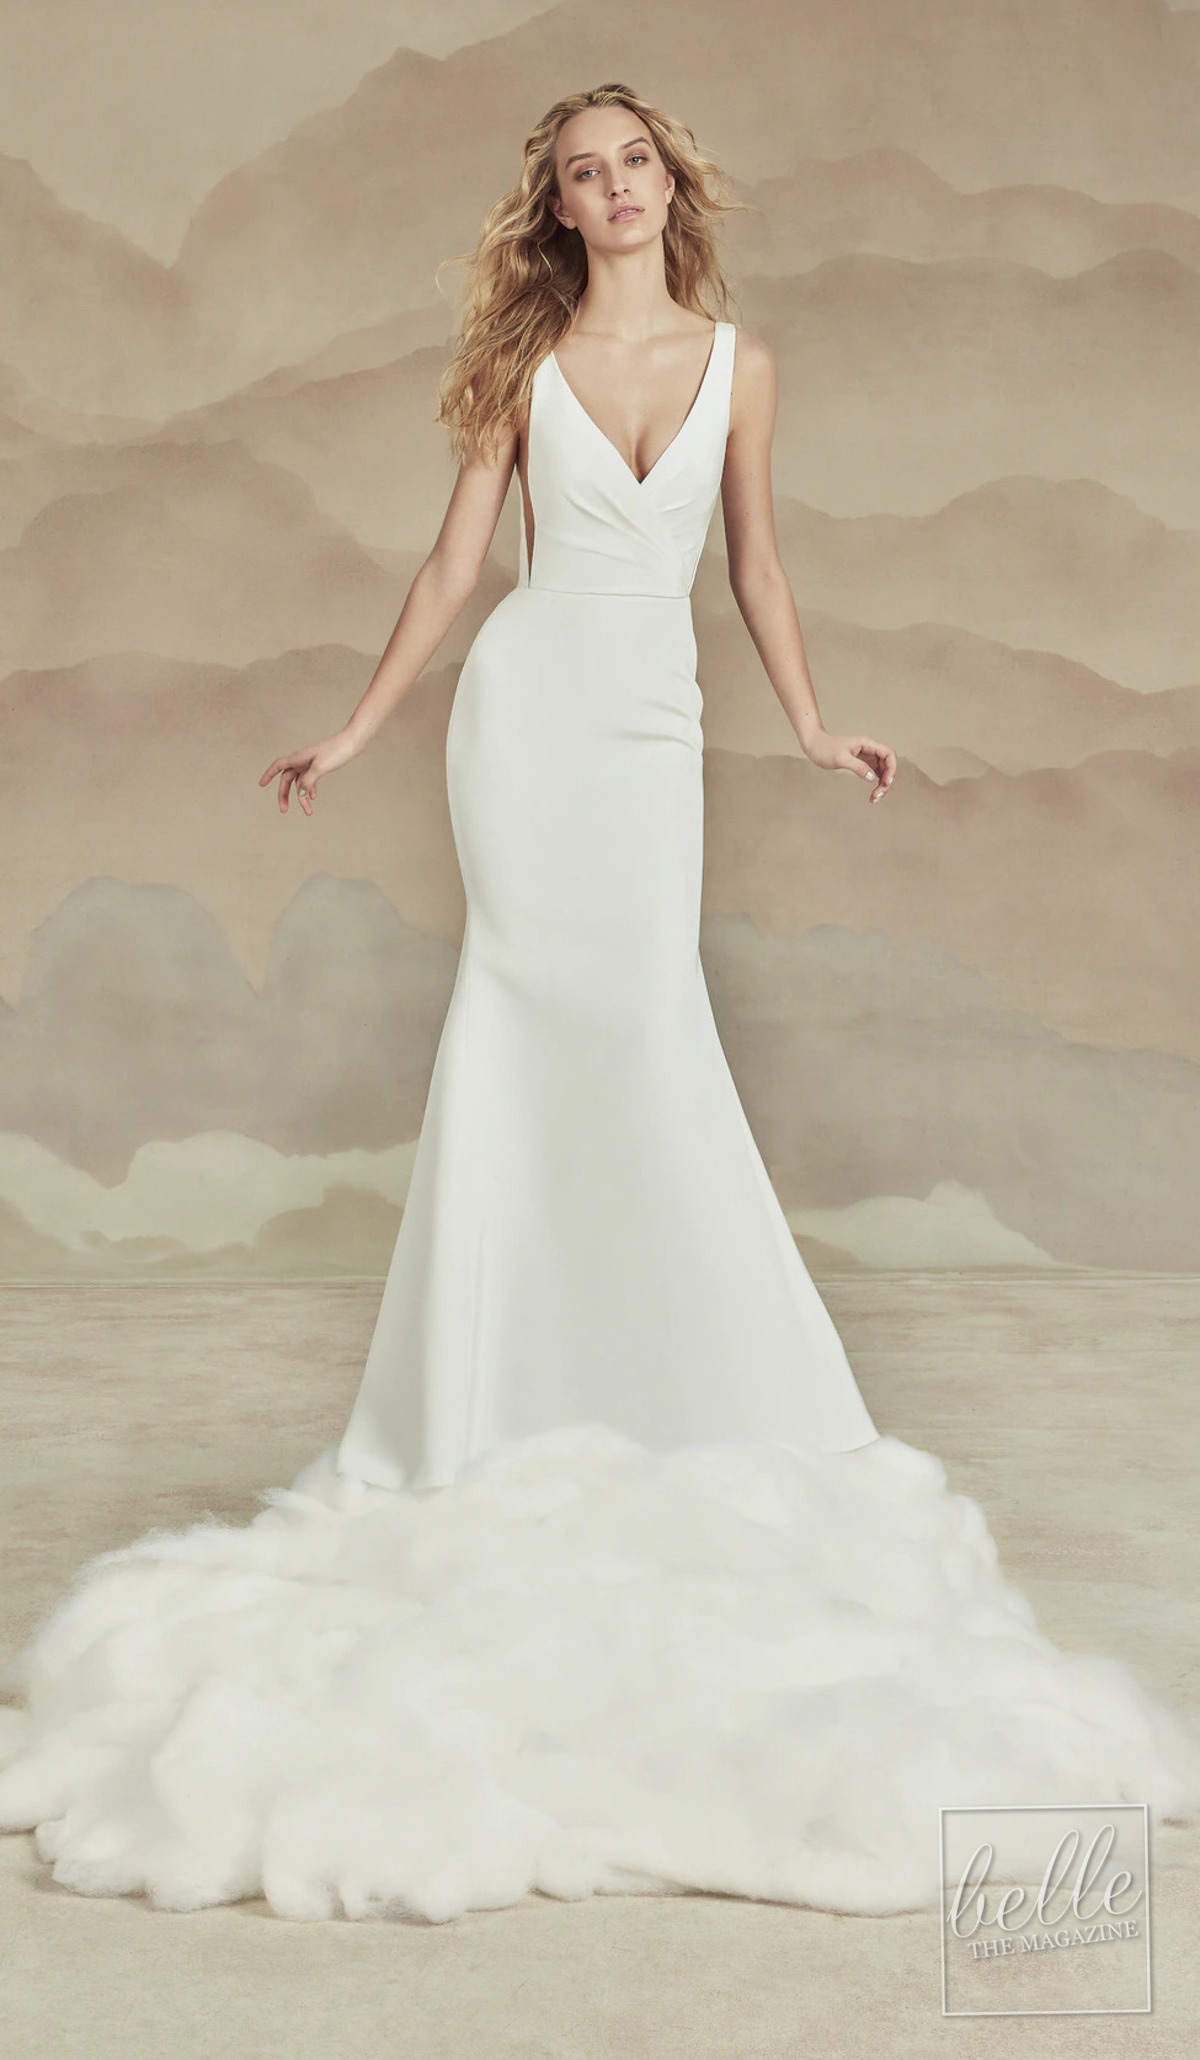 Wedding dress trends 2021 - Minimalist gown - INES DI SANTO ELEN